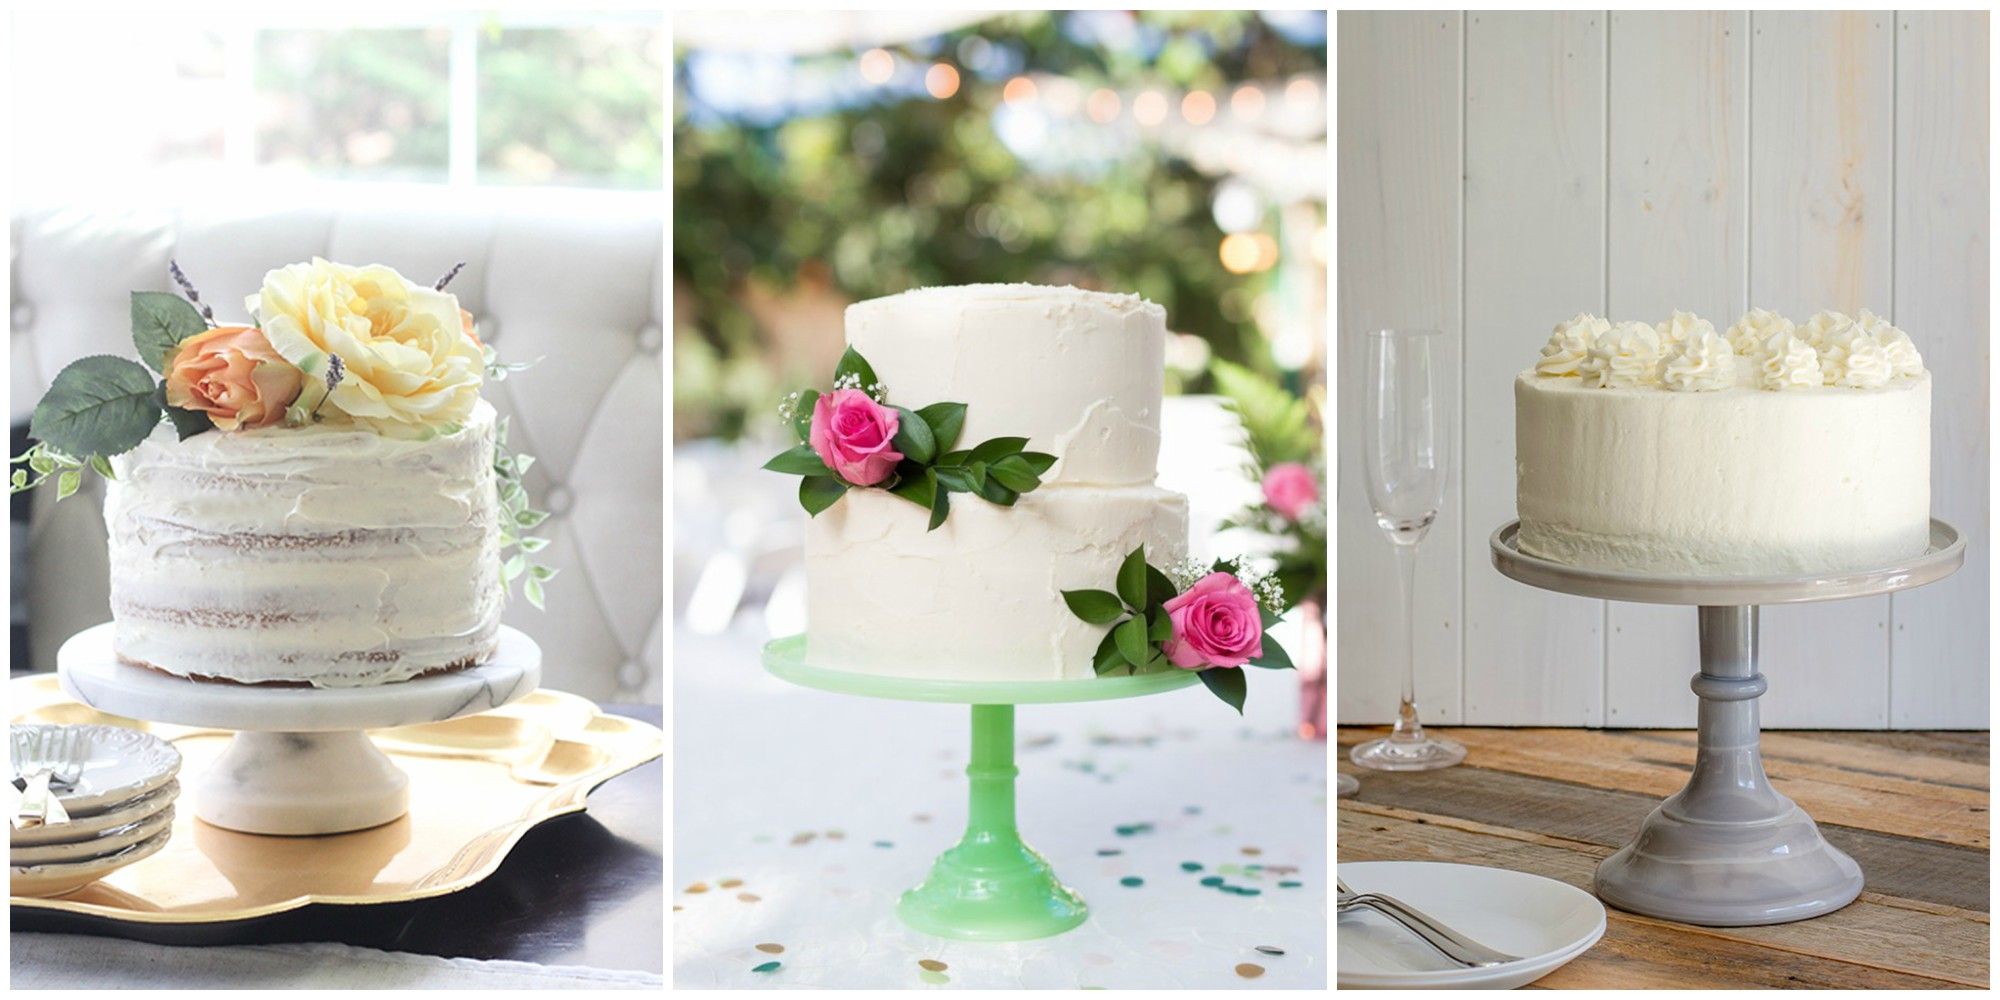 35 Wedding cake ideas - Airtasker Blog